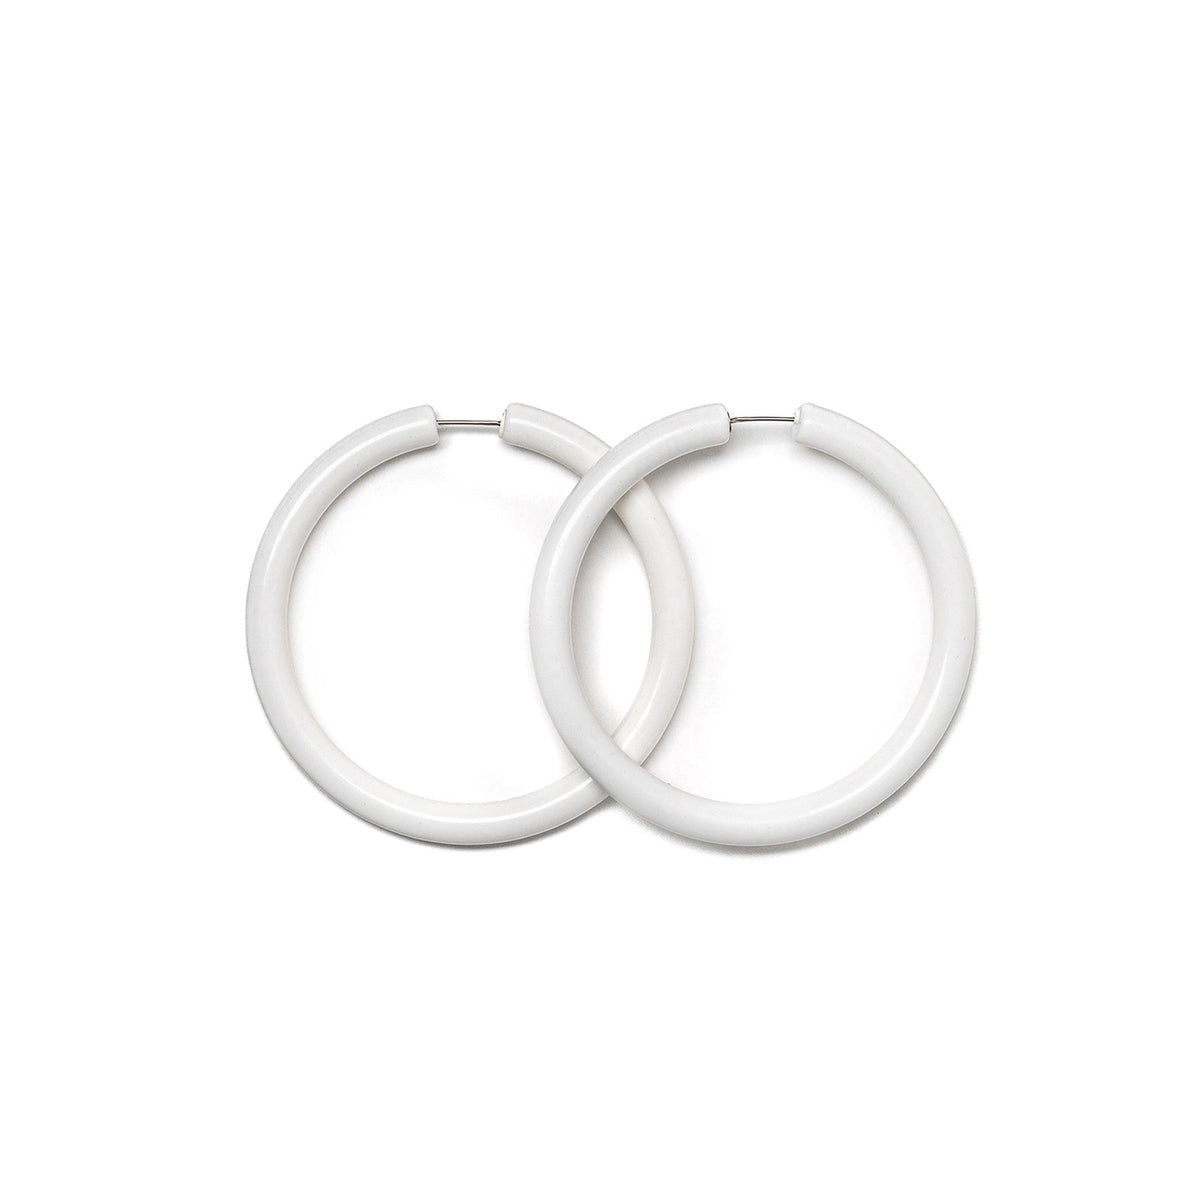 White hoop earrings for women, dazzling white hoops from Carmen Sol